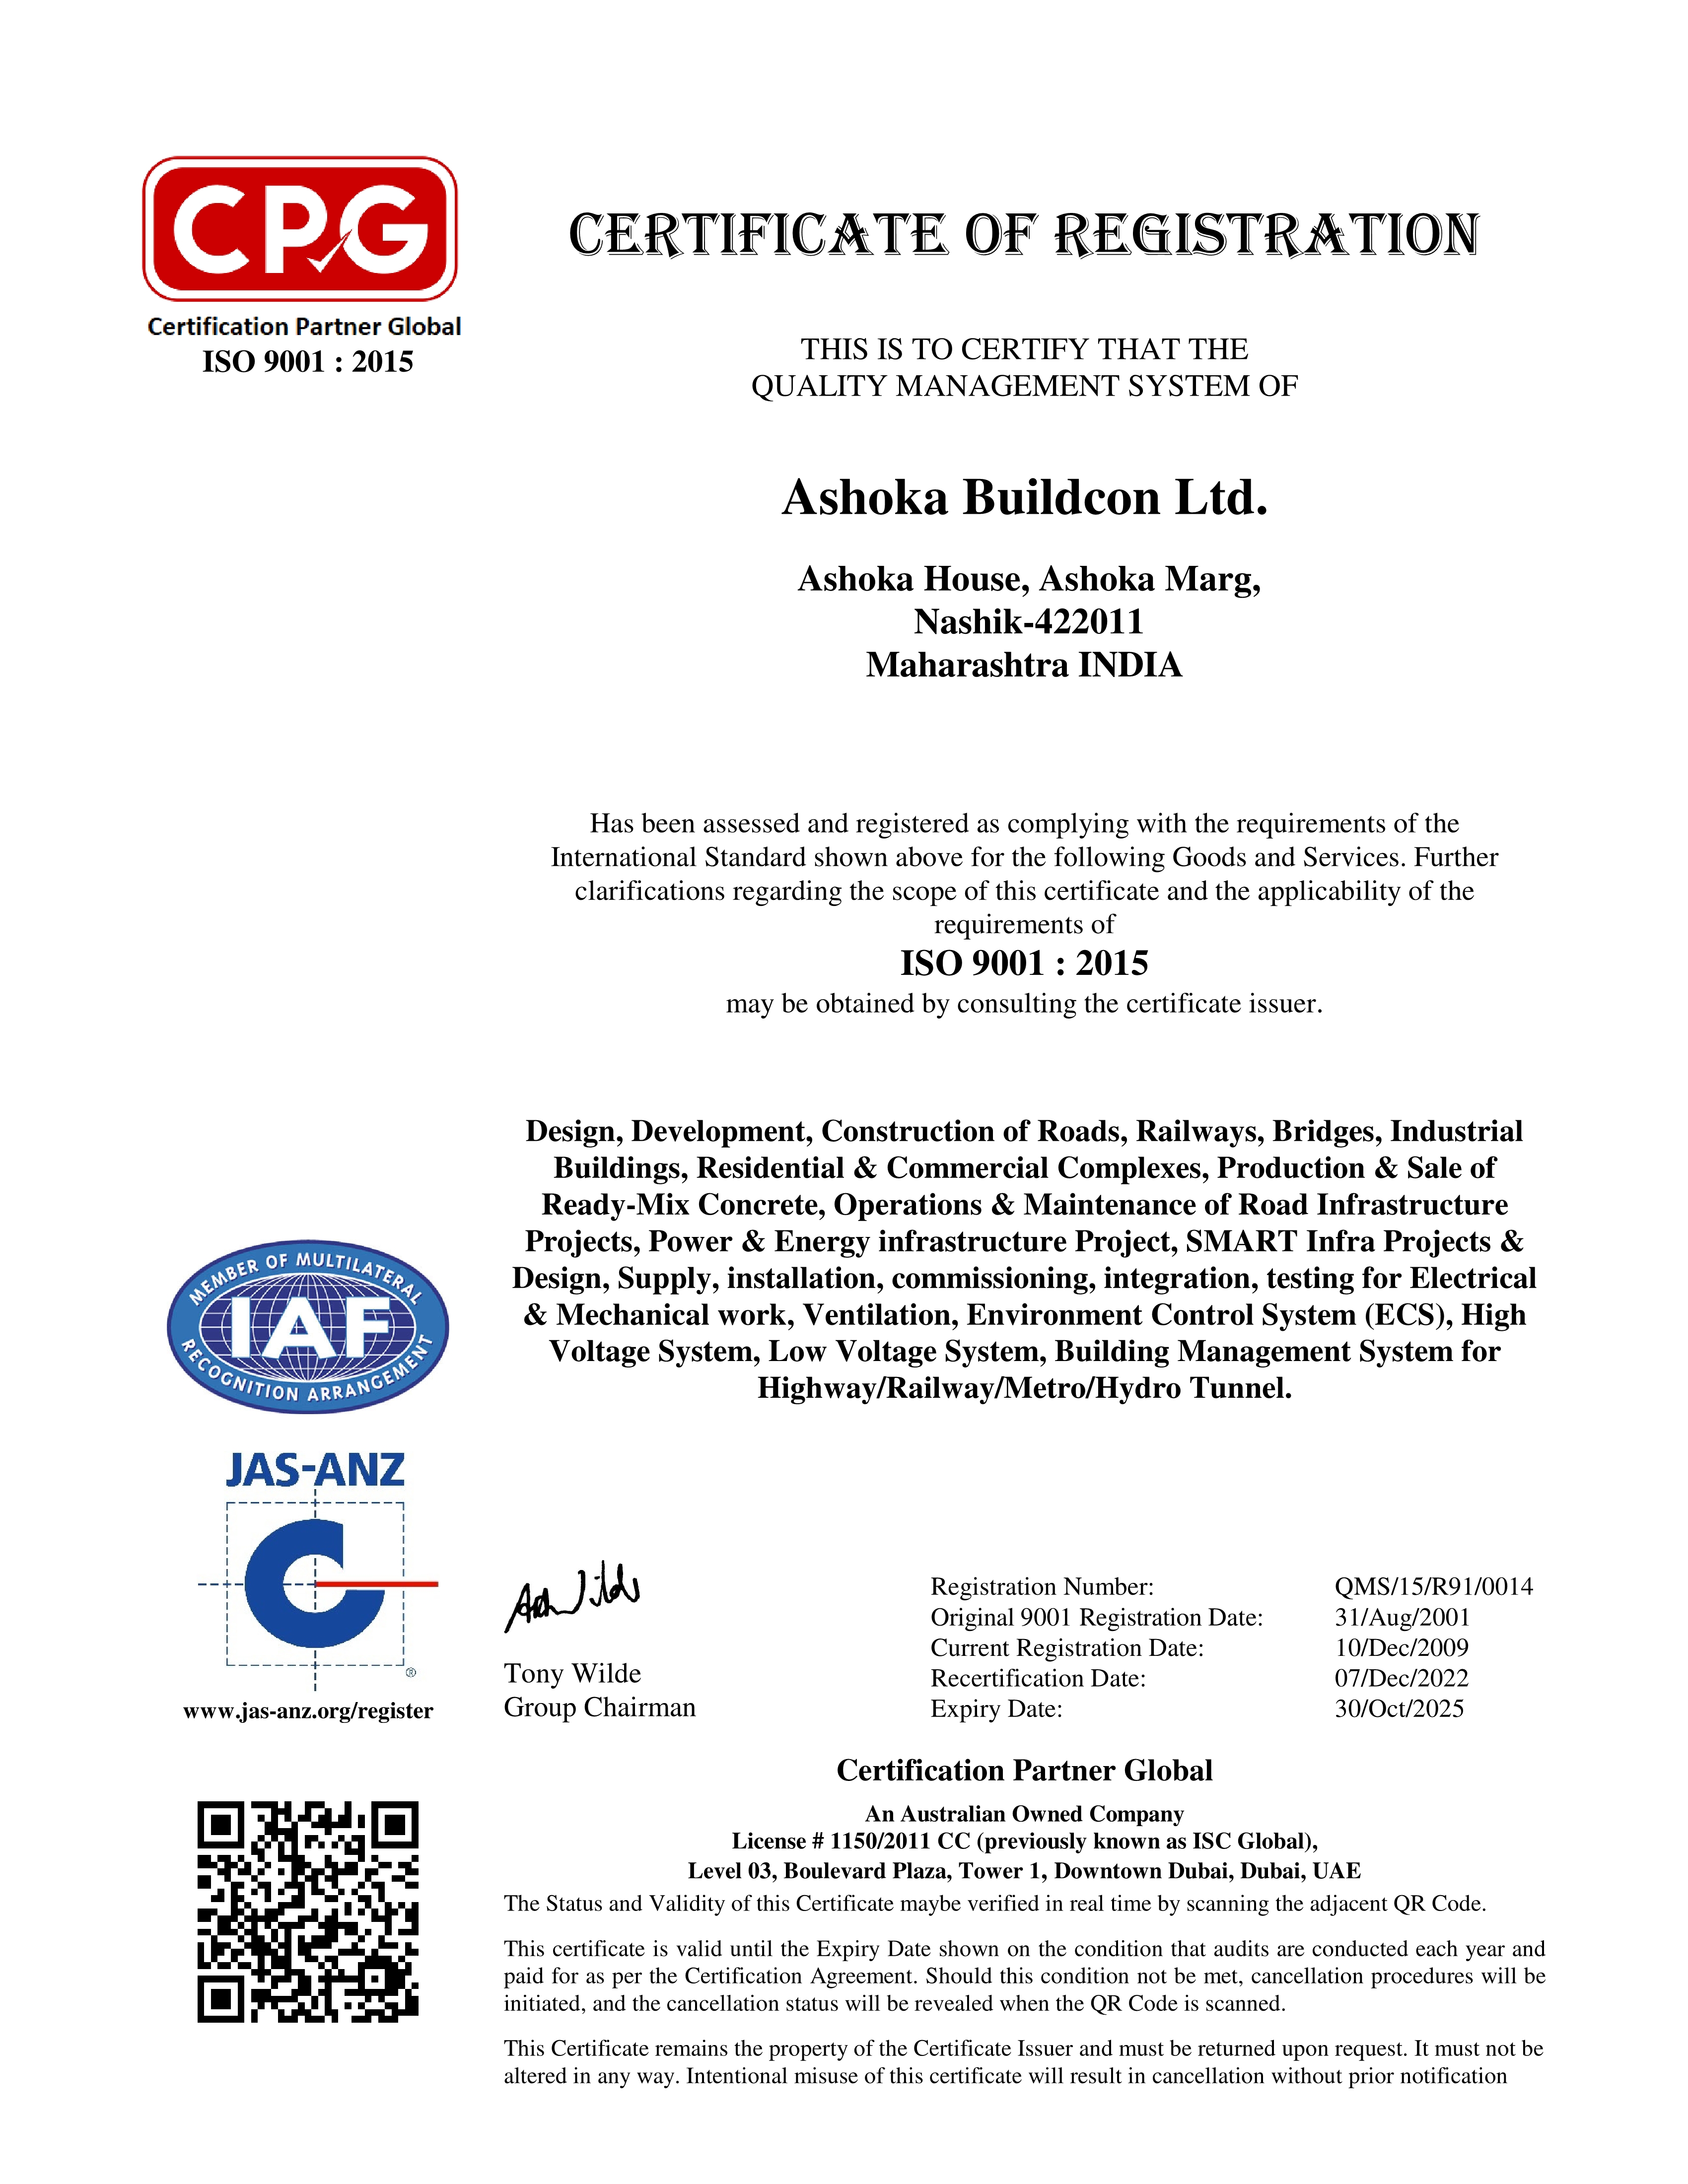 QHSE Certificate